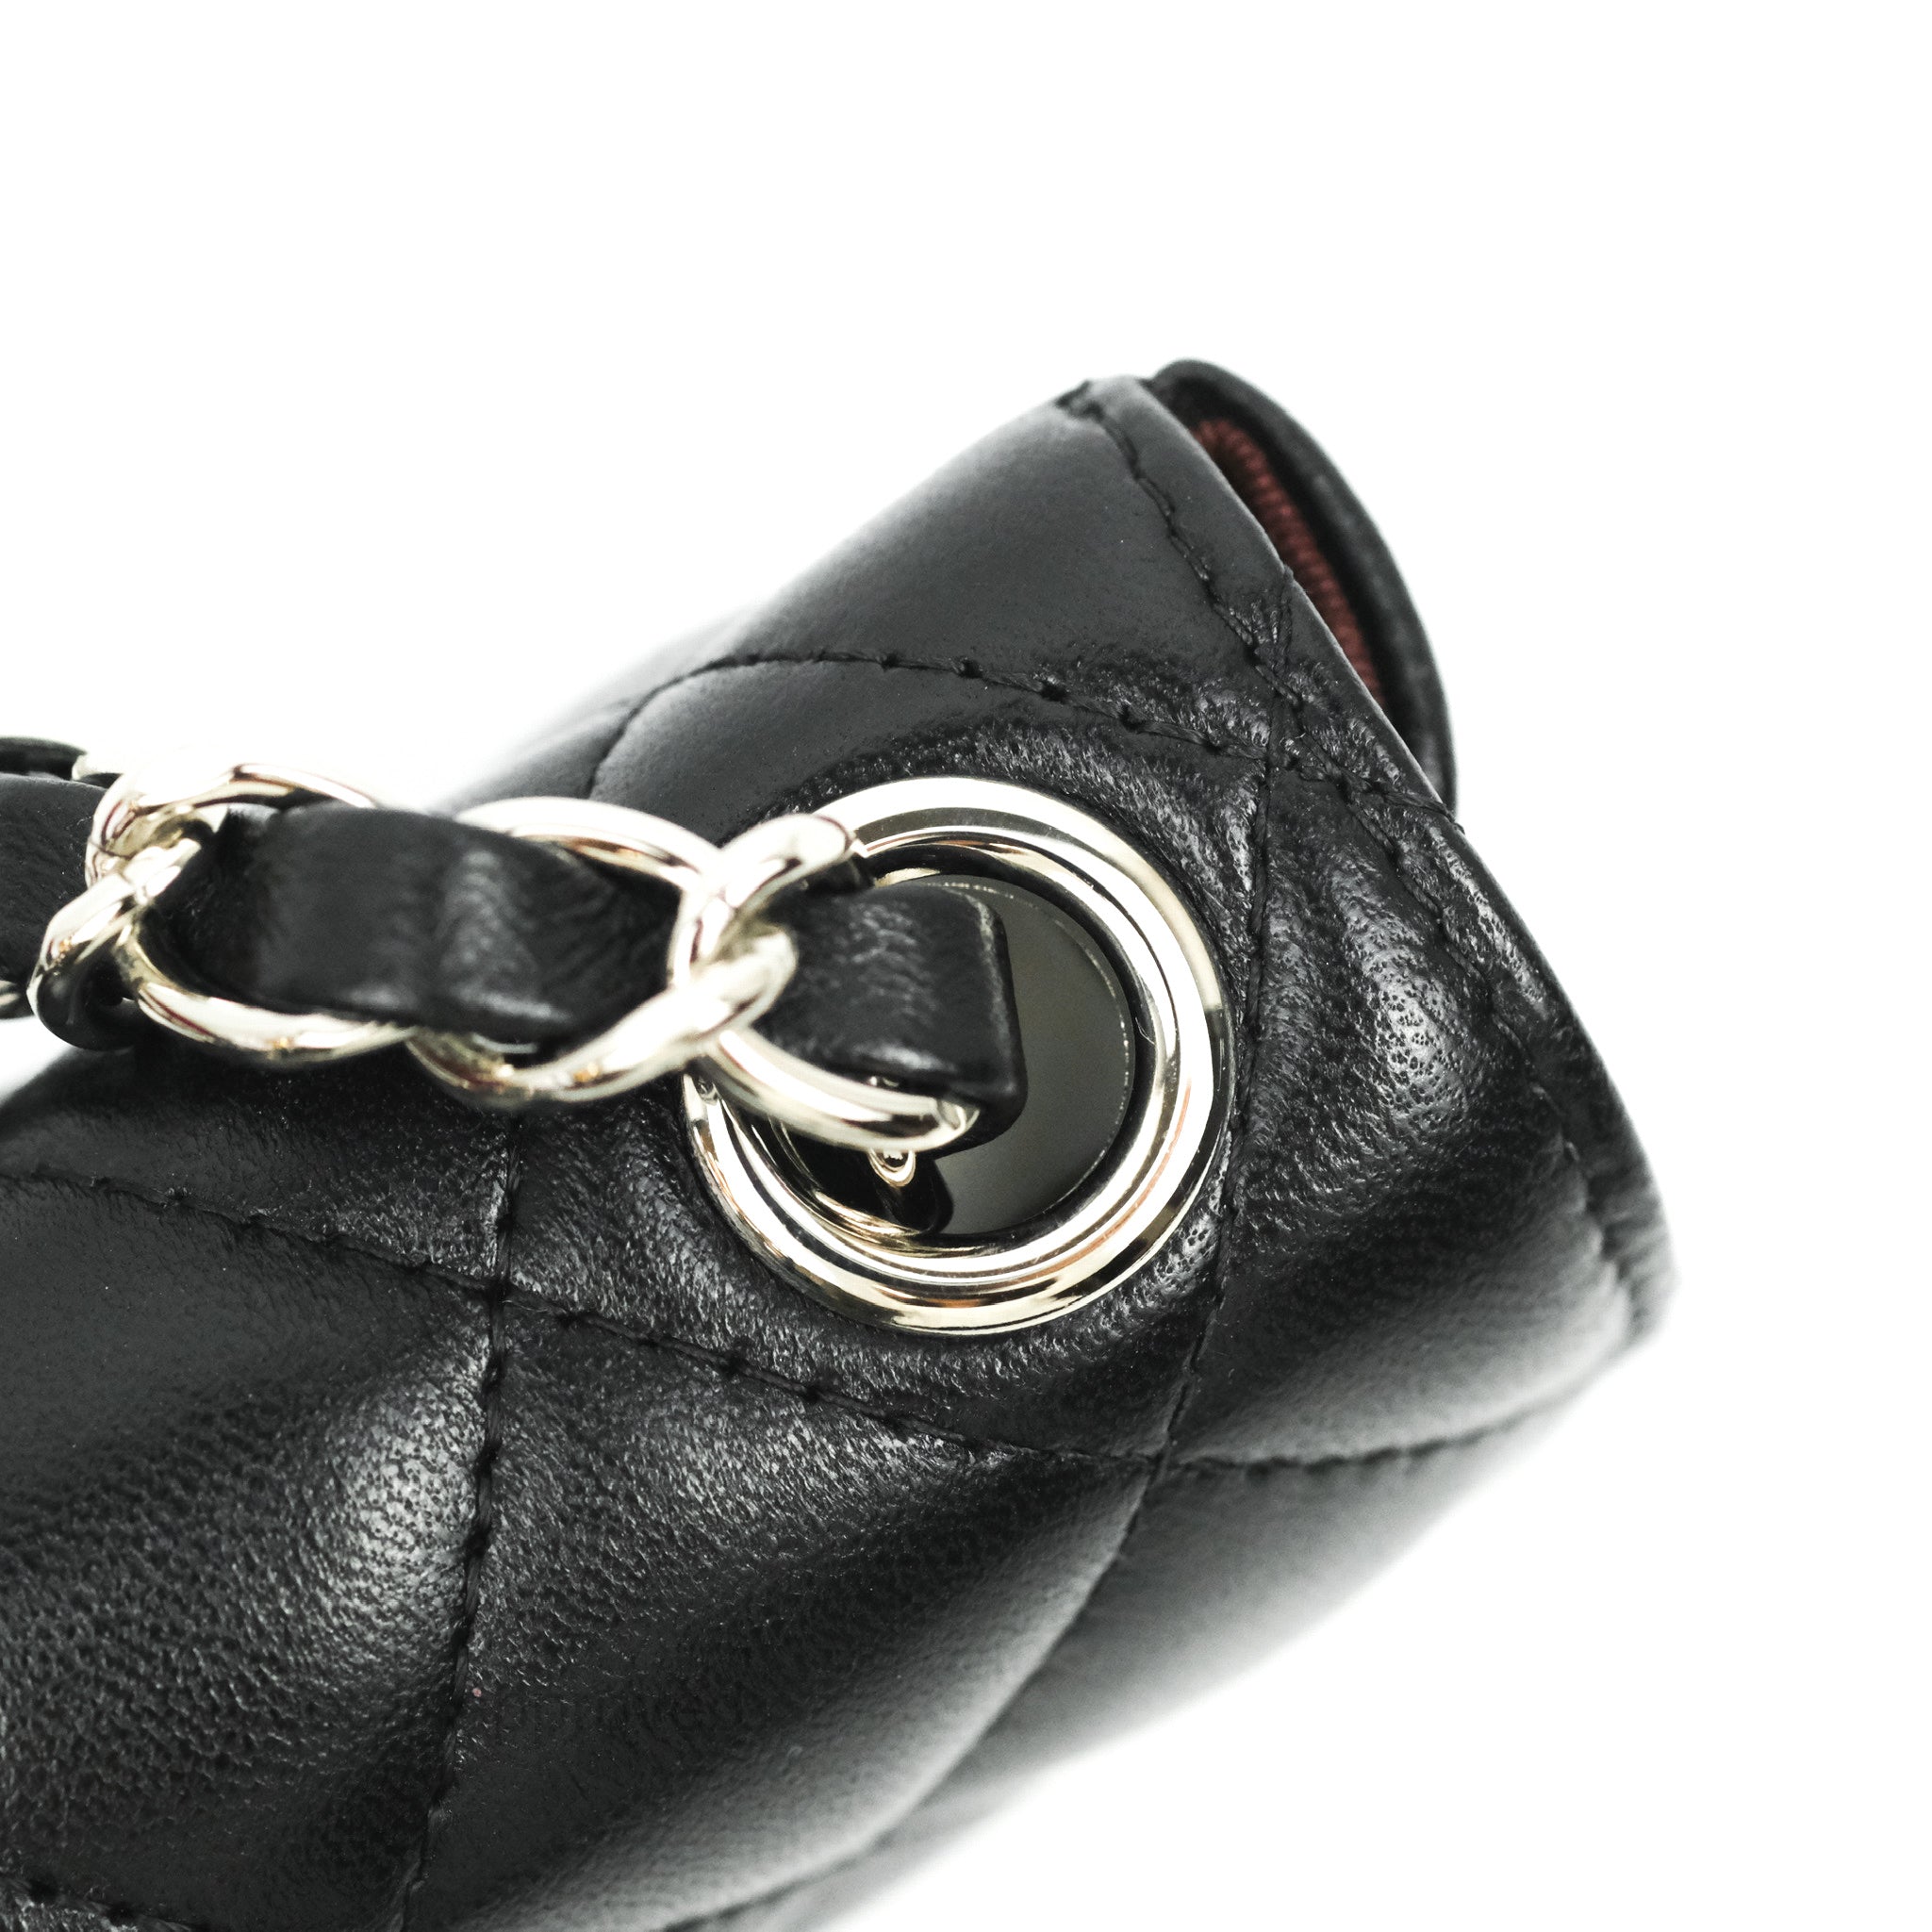 Chanel Mini Card Holder Chain Belt Bag Black Lambskin Silver Hardware –  Coco Approved Studio